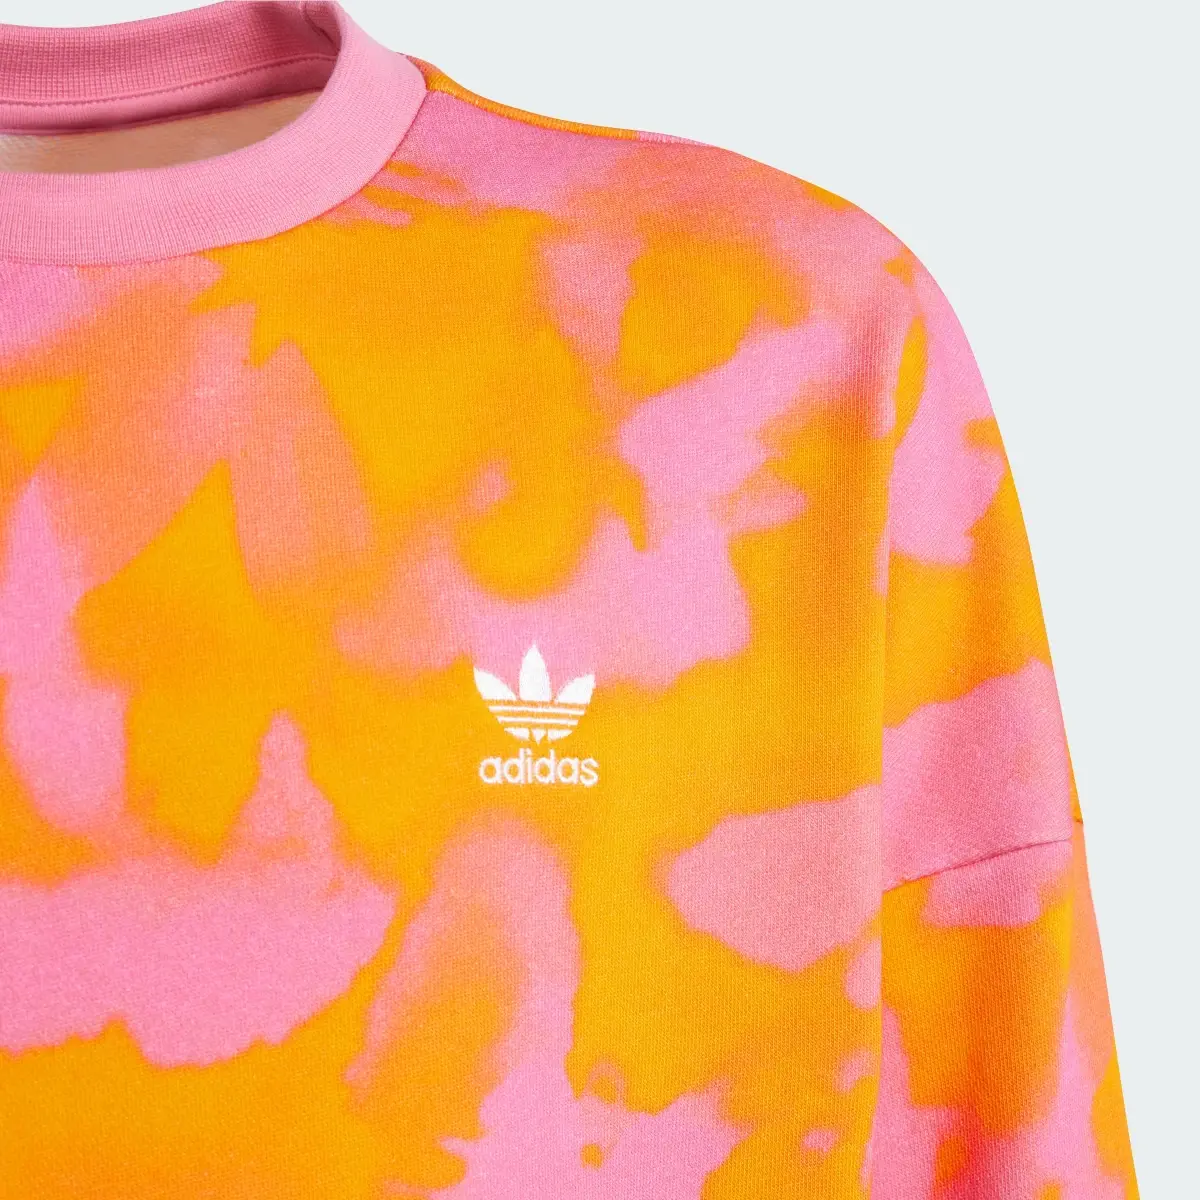 Adidas Sweat-shirt ras-du-cou imprimé intégral Summer. 3